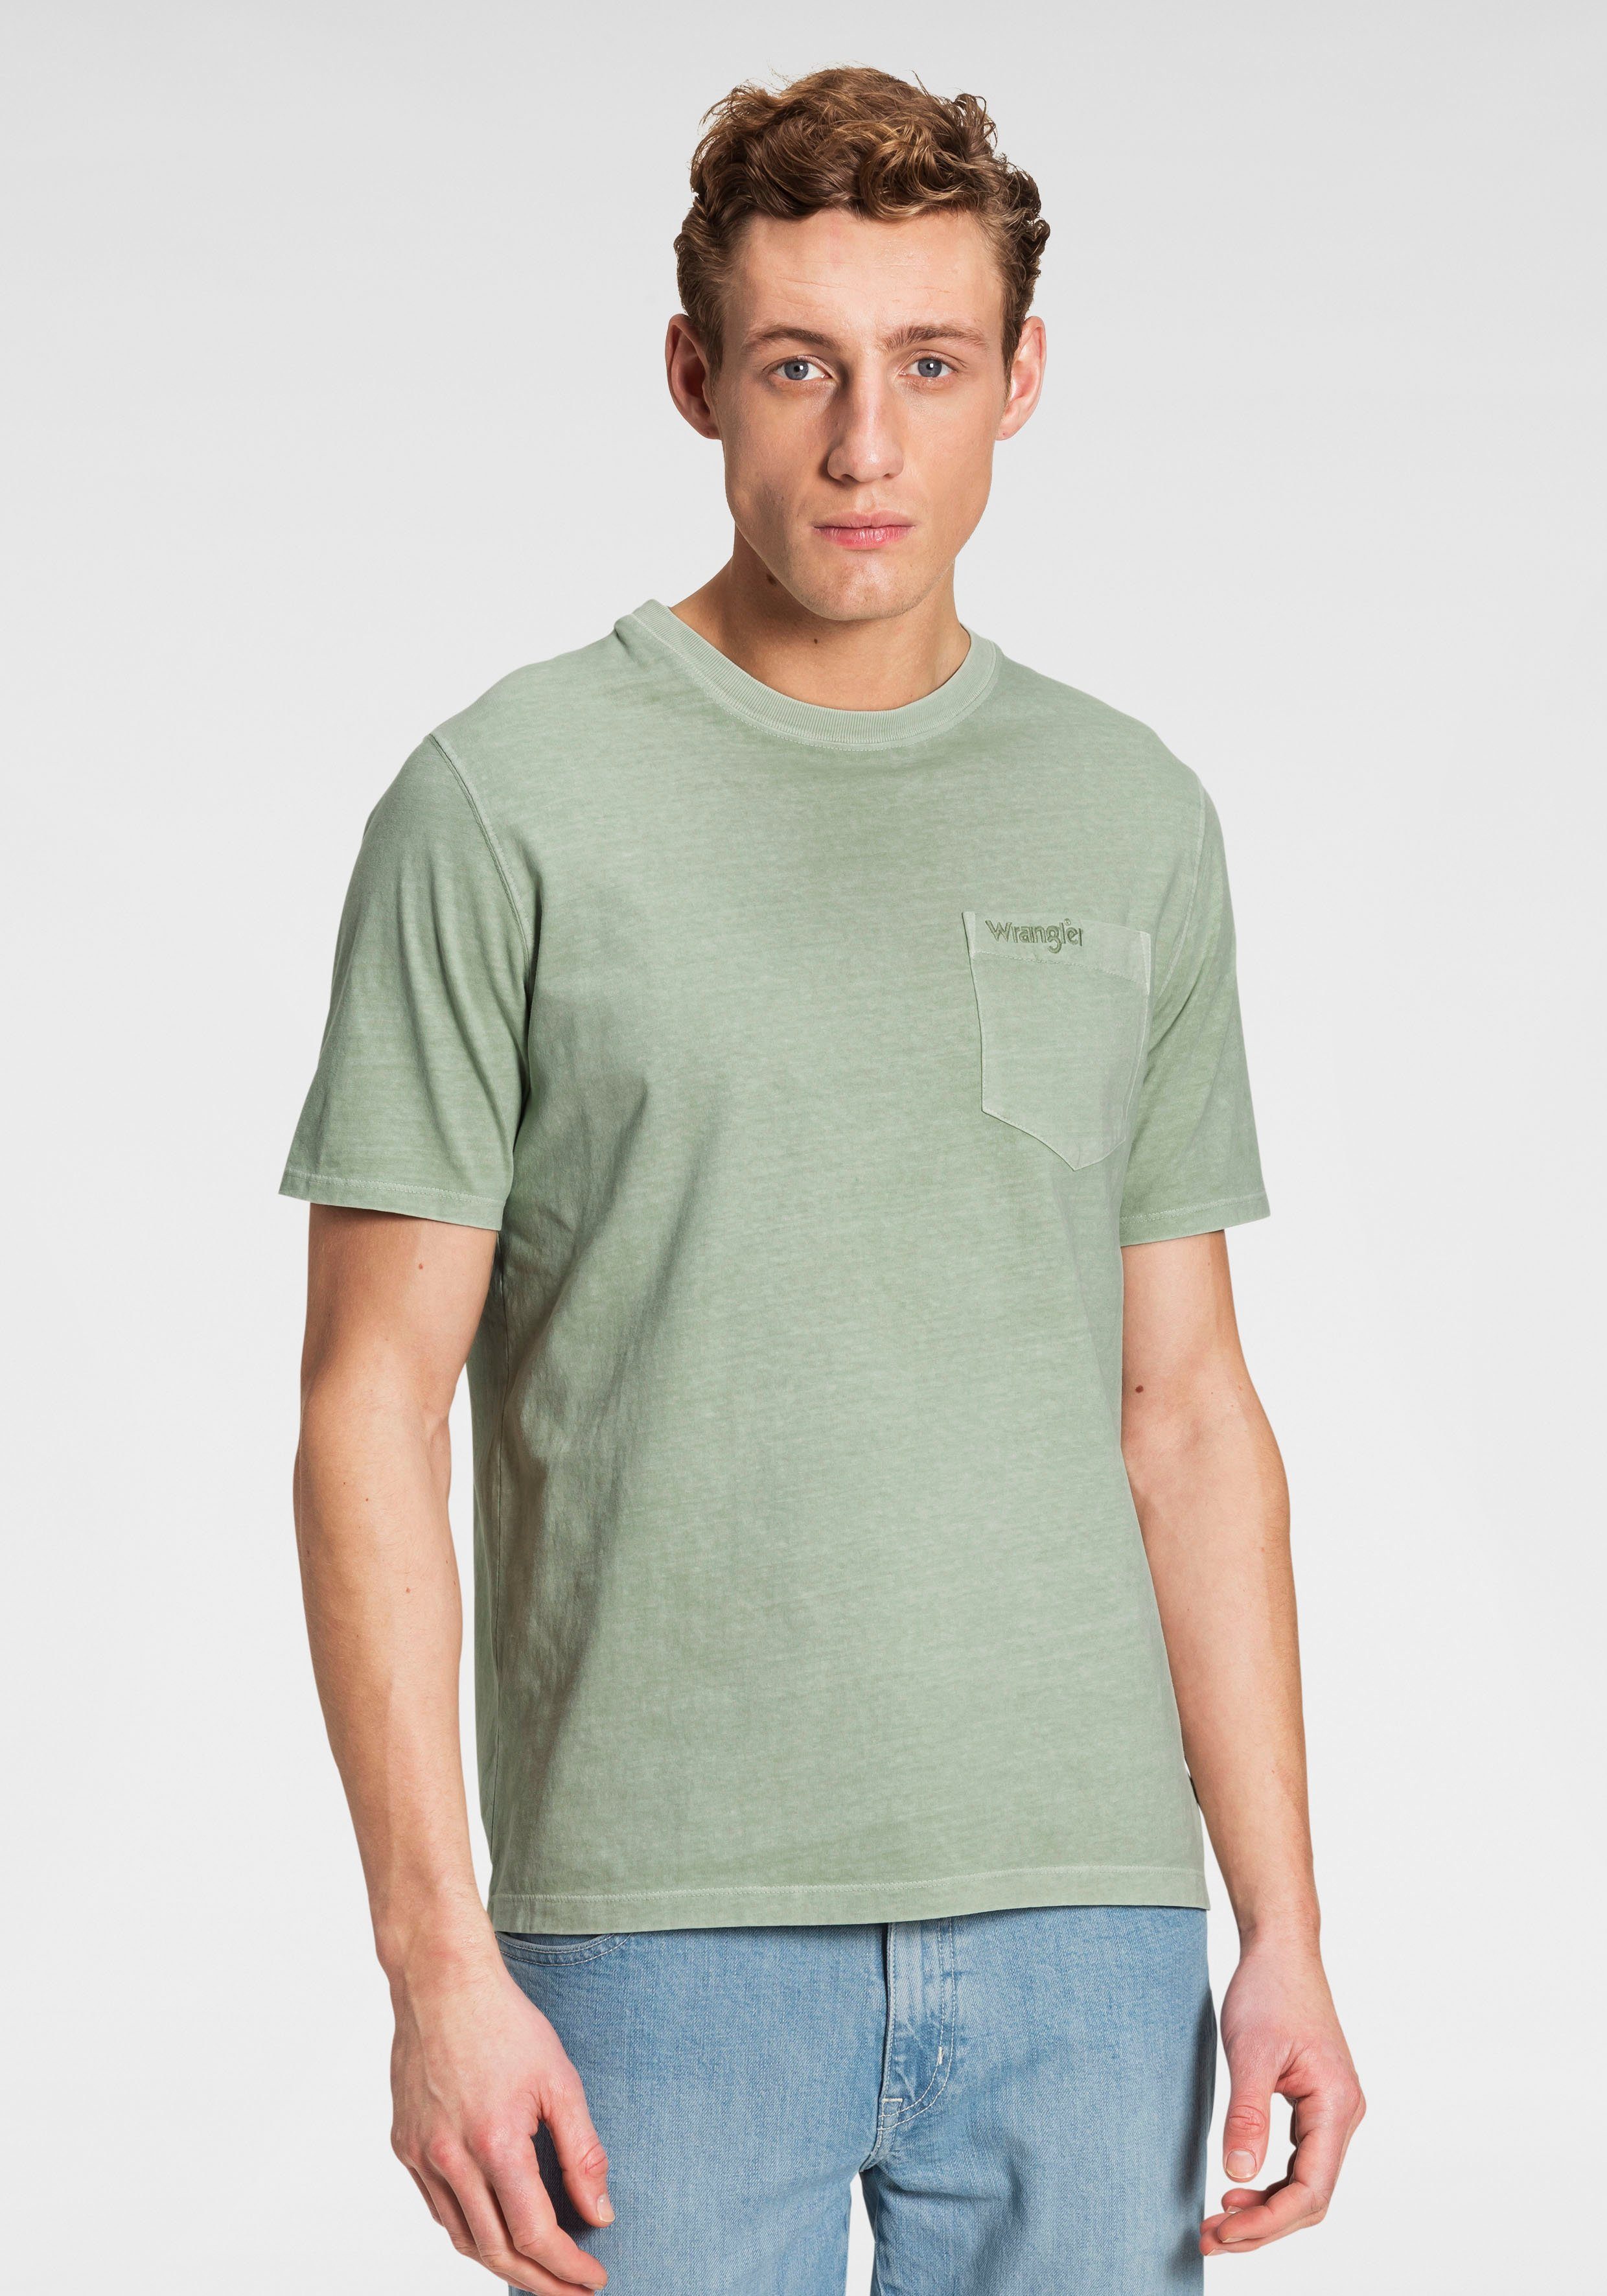 Wrangler T-Shirt Pocket Tee tea leaf